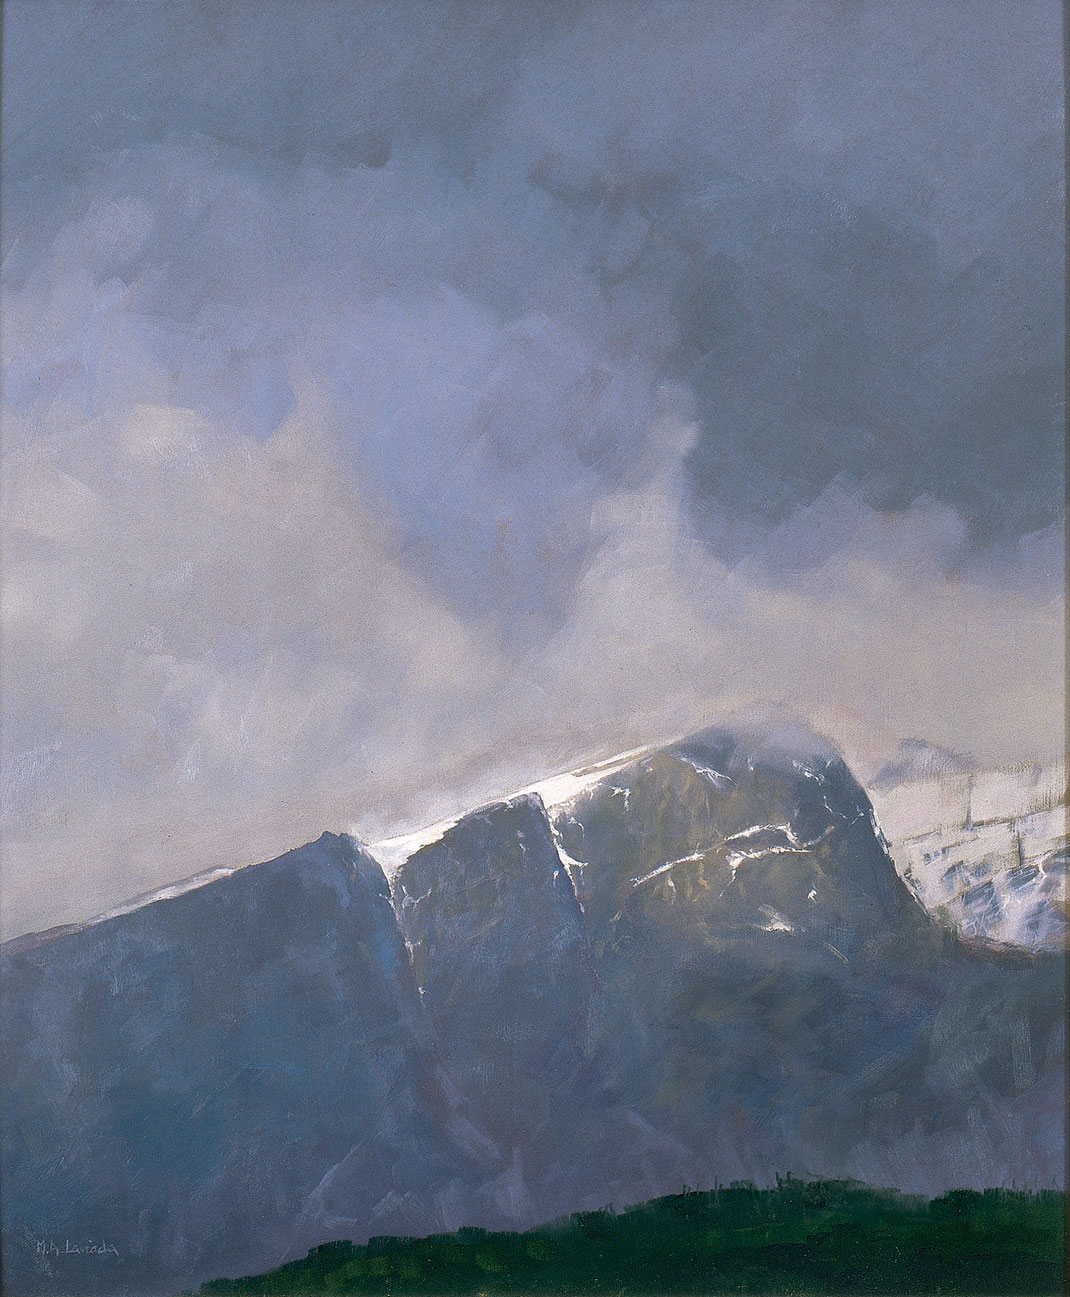 Montaña nevada (Asturias), 1998. Óleo sobre tabla 65 x 54 cm